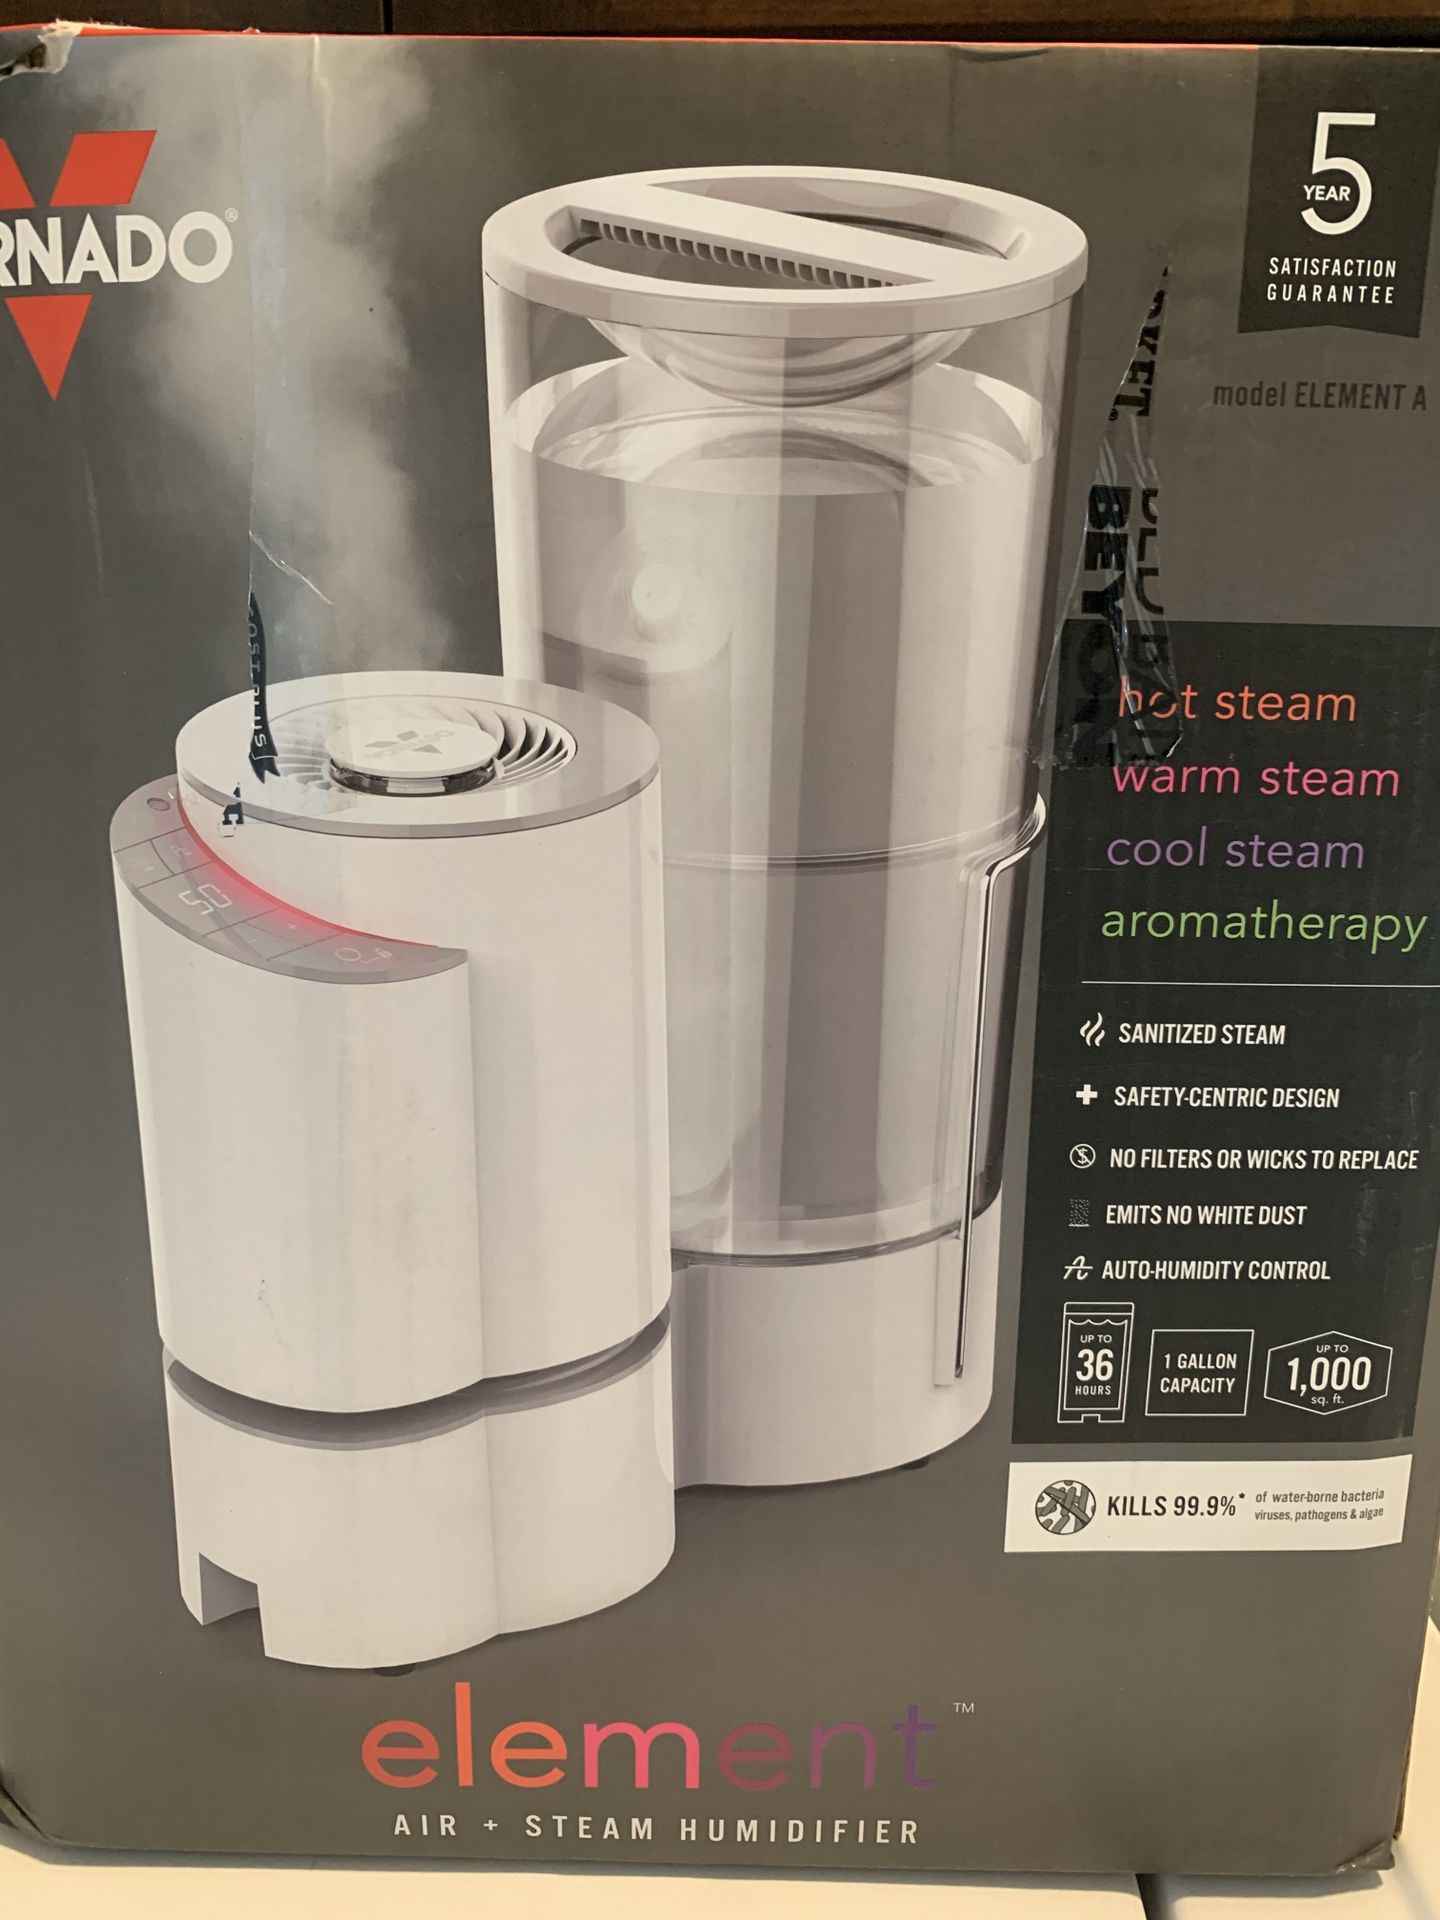 Vornado element air+steam humidifier